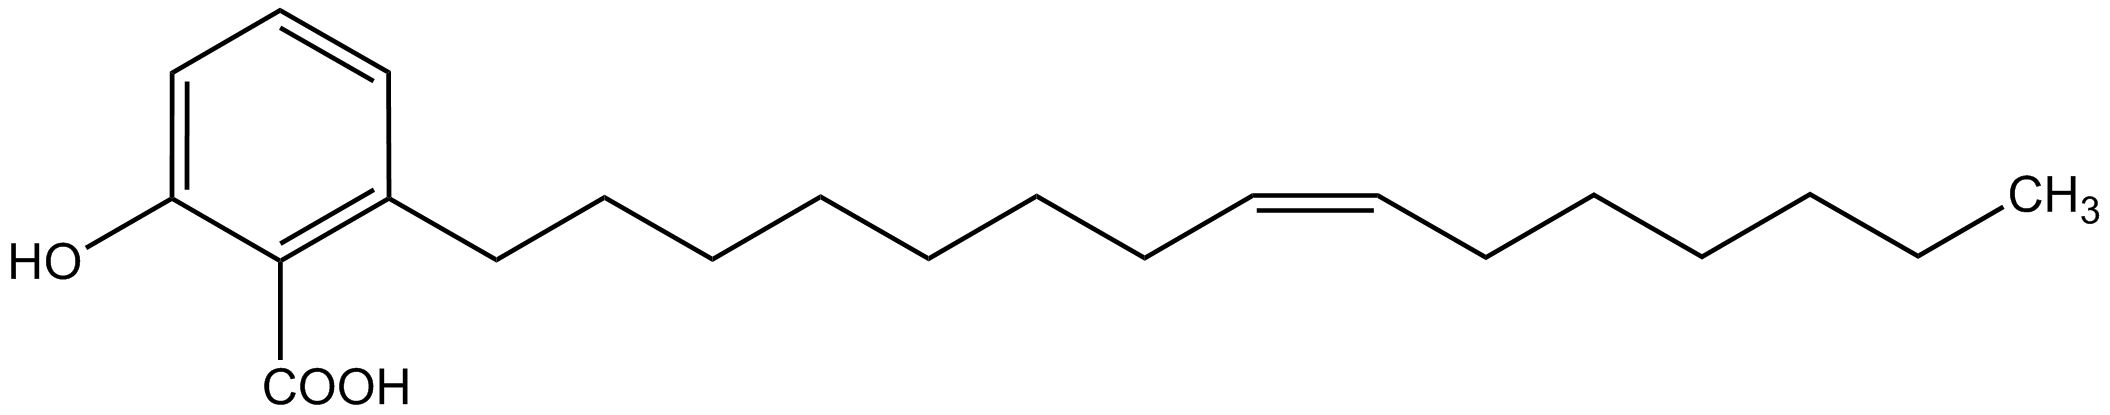 Ginkgolic acid C15:1 phyproof® Reference Substance | PhytoLab